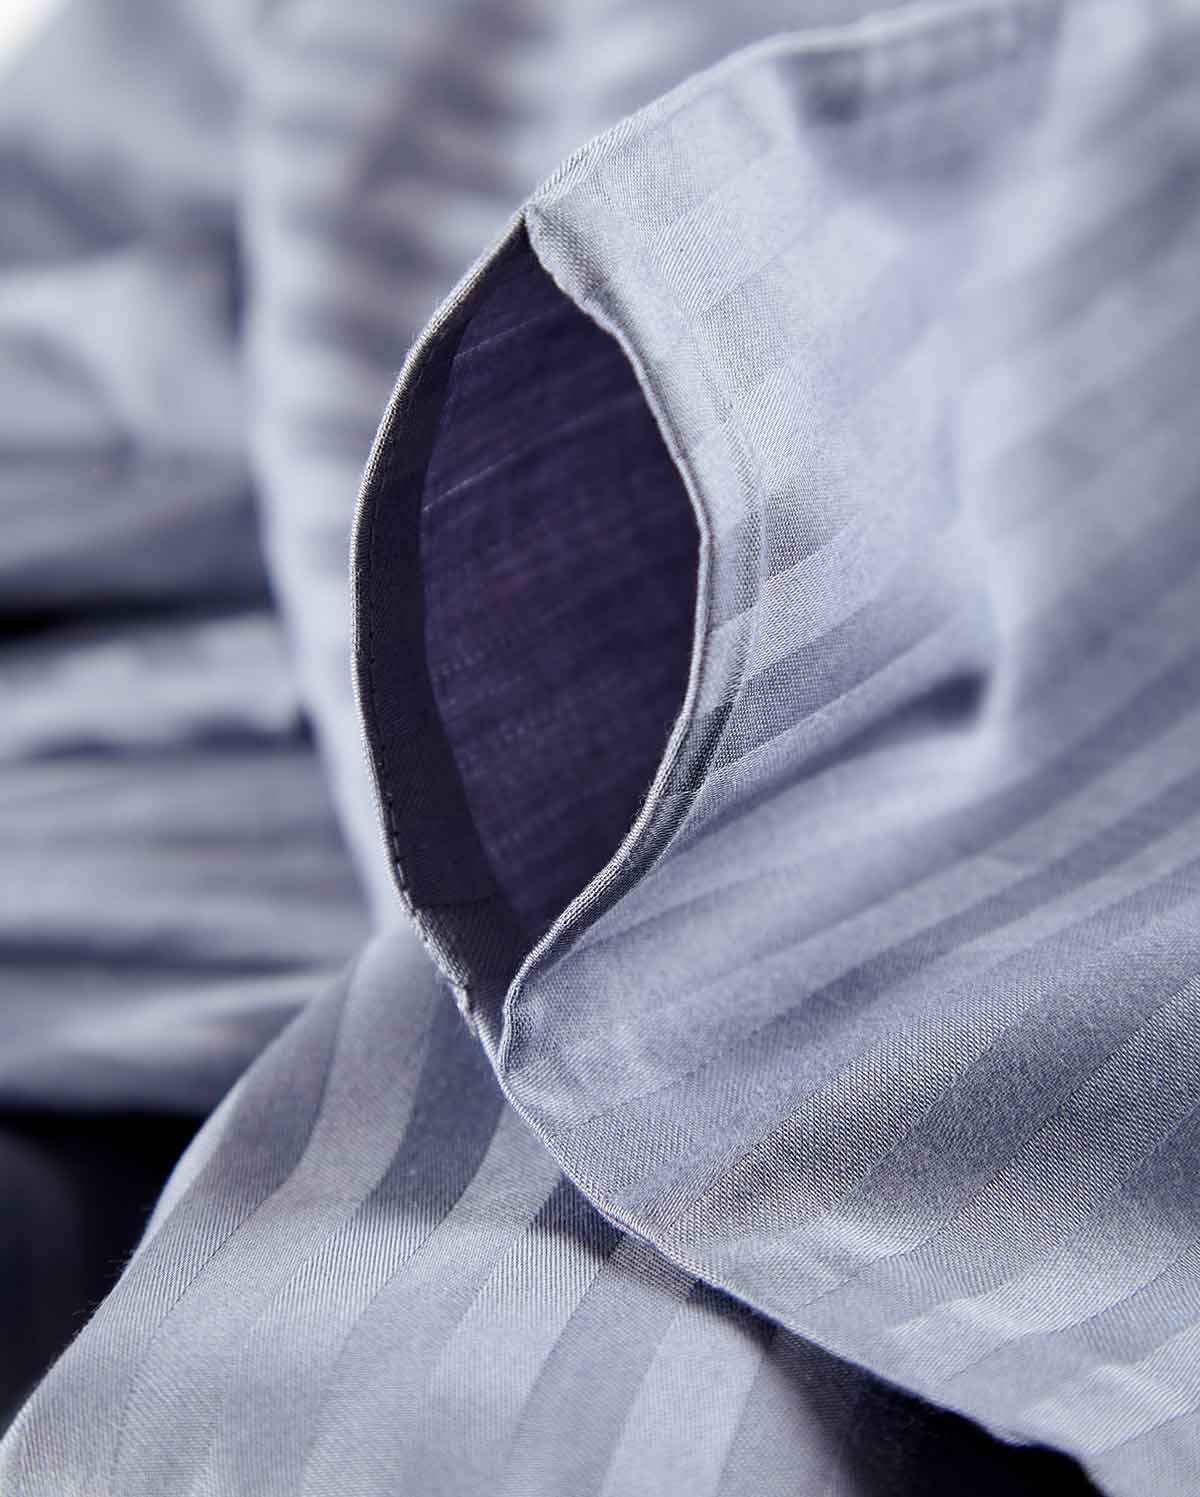 Sateen Stripe - Duvet Cover Set - Dark Grey